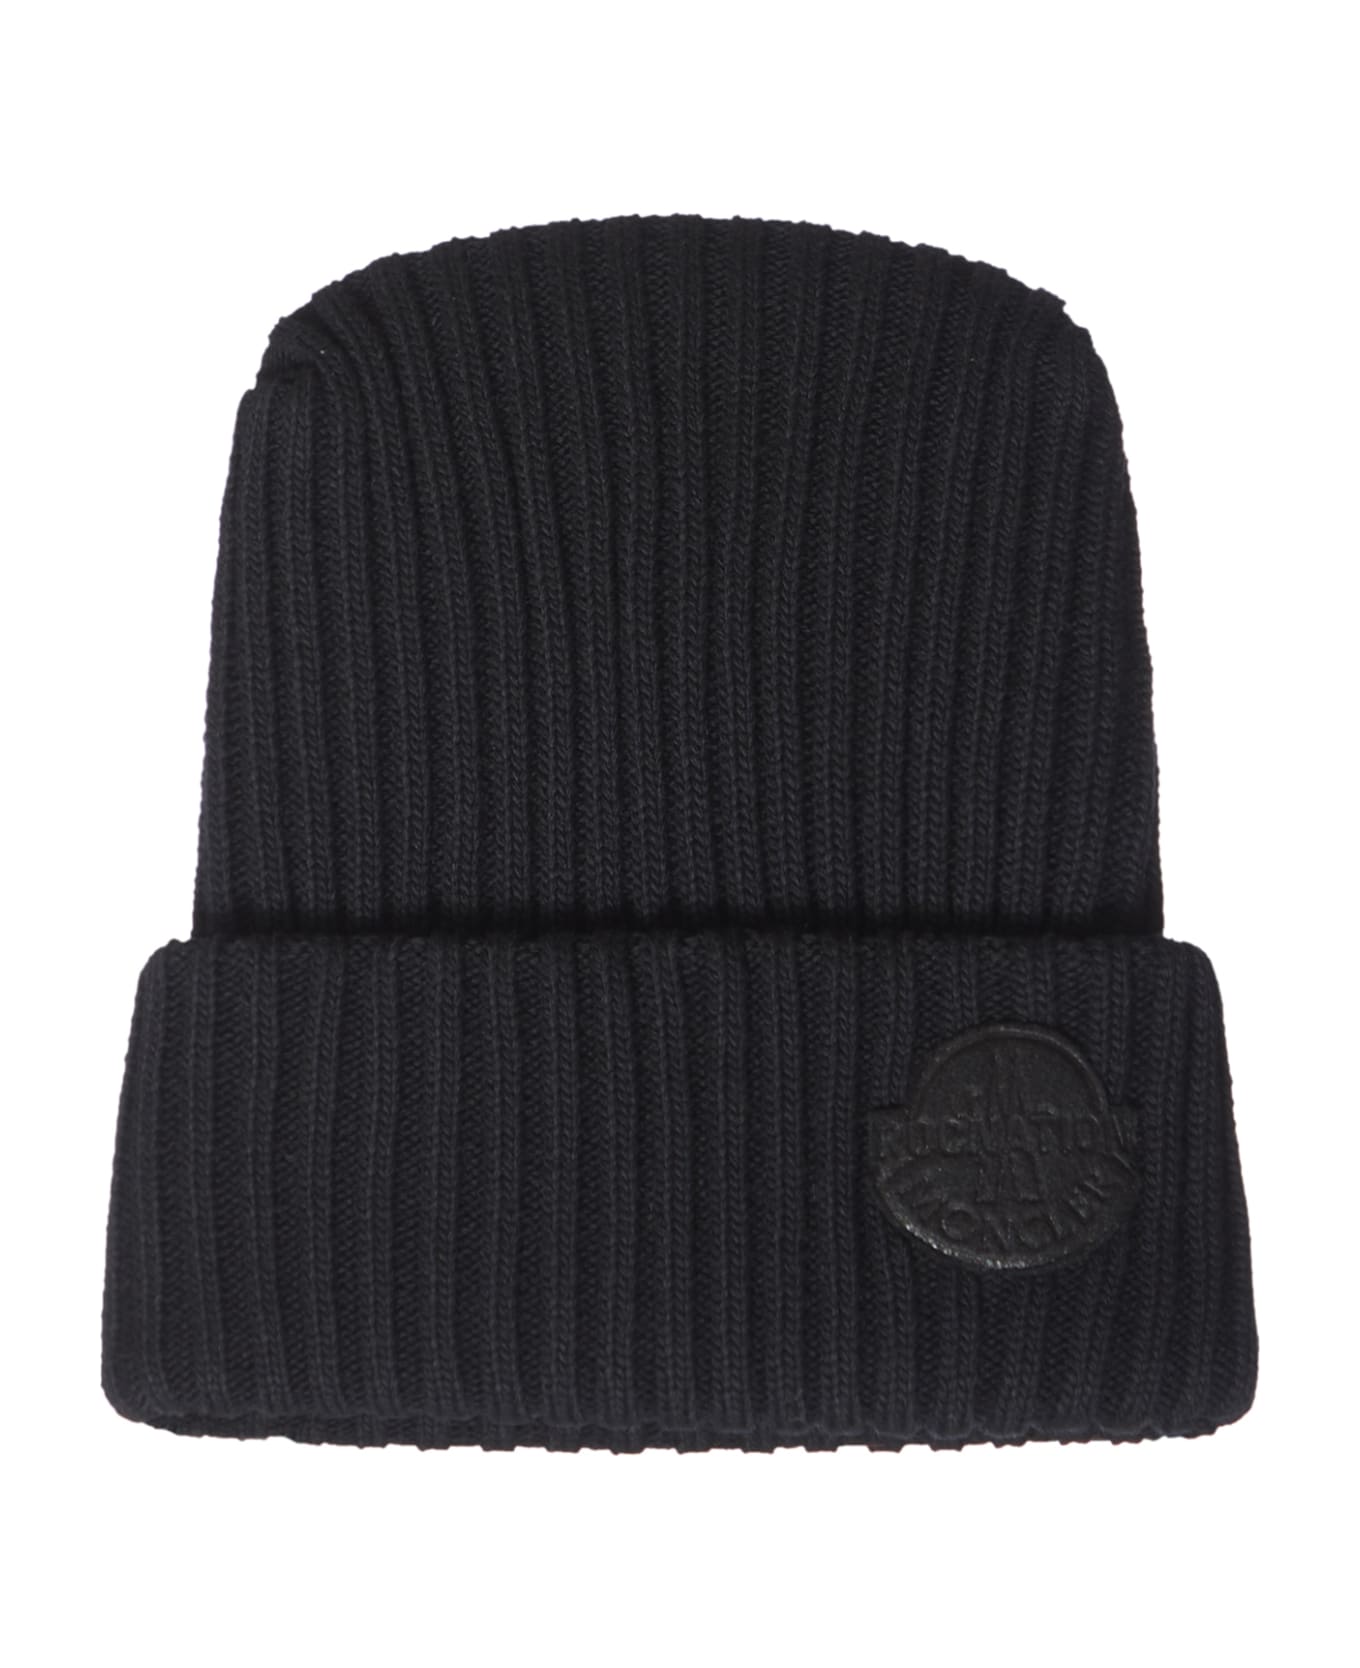 Moncler Genius Hat - Black